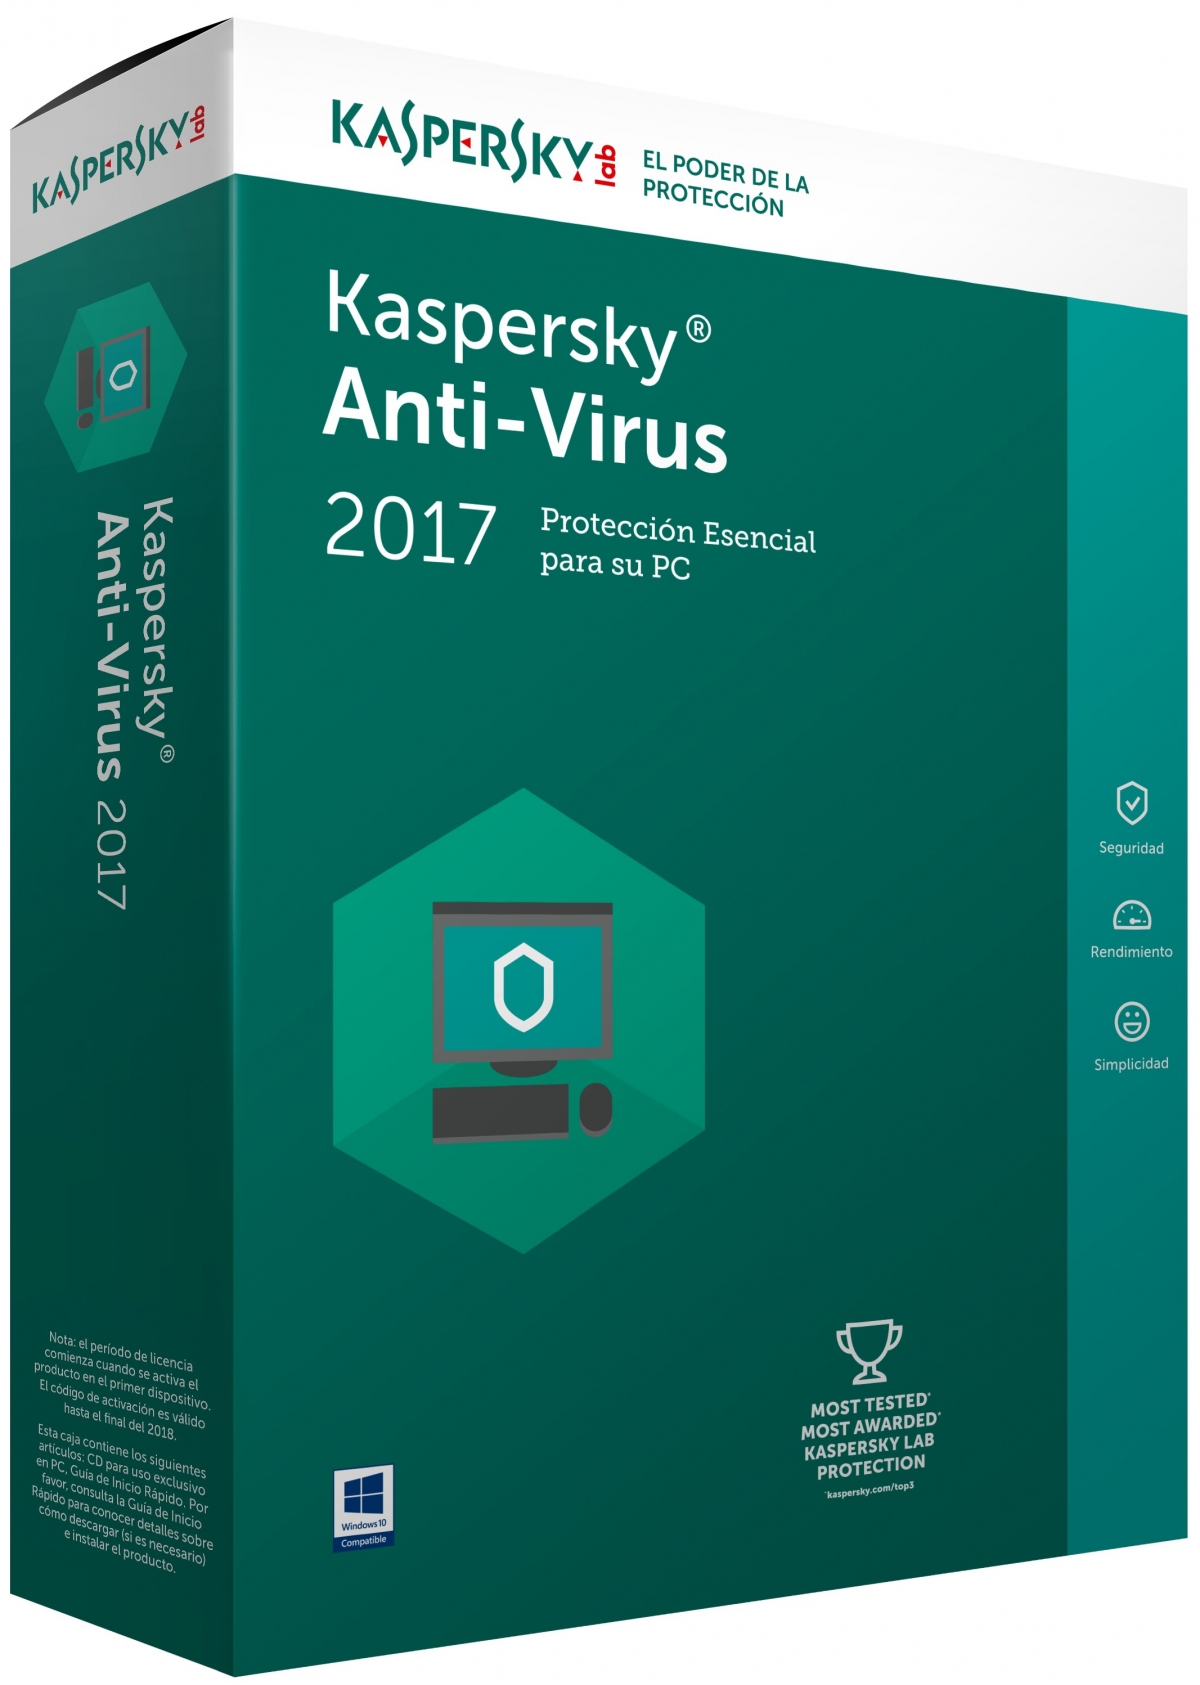 kaspersky lab website